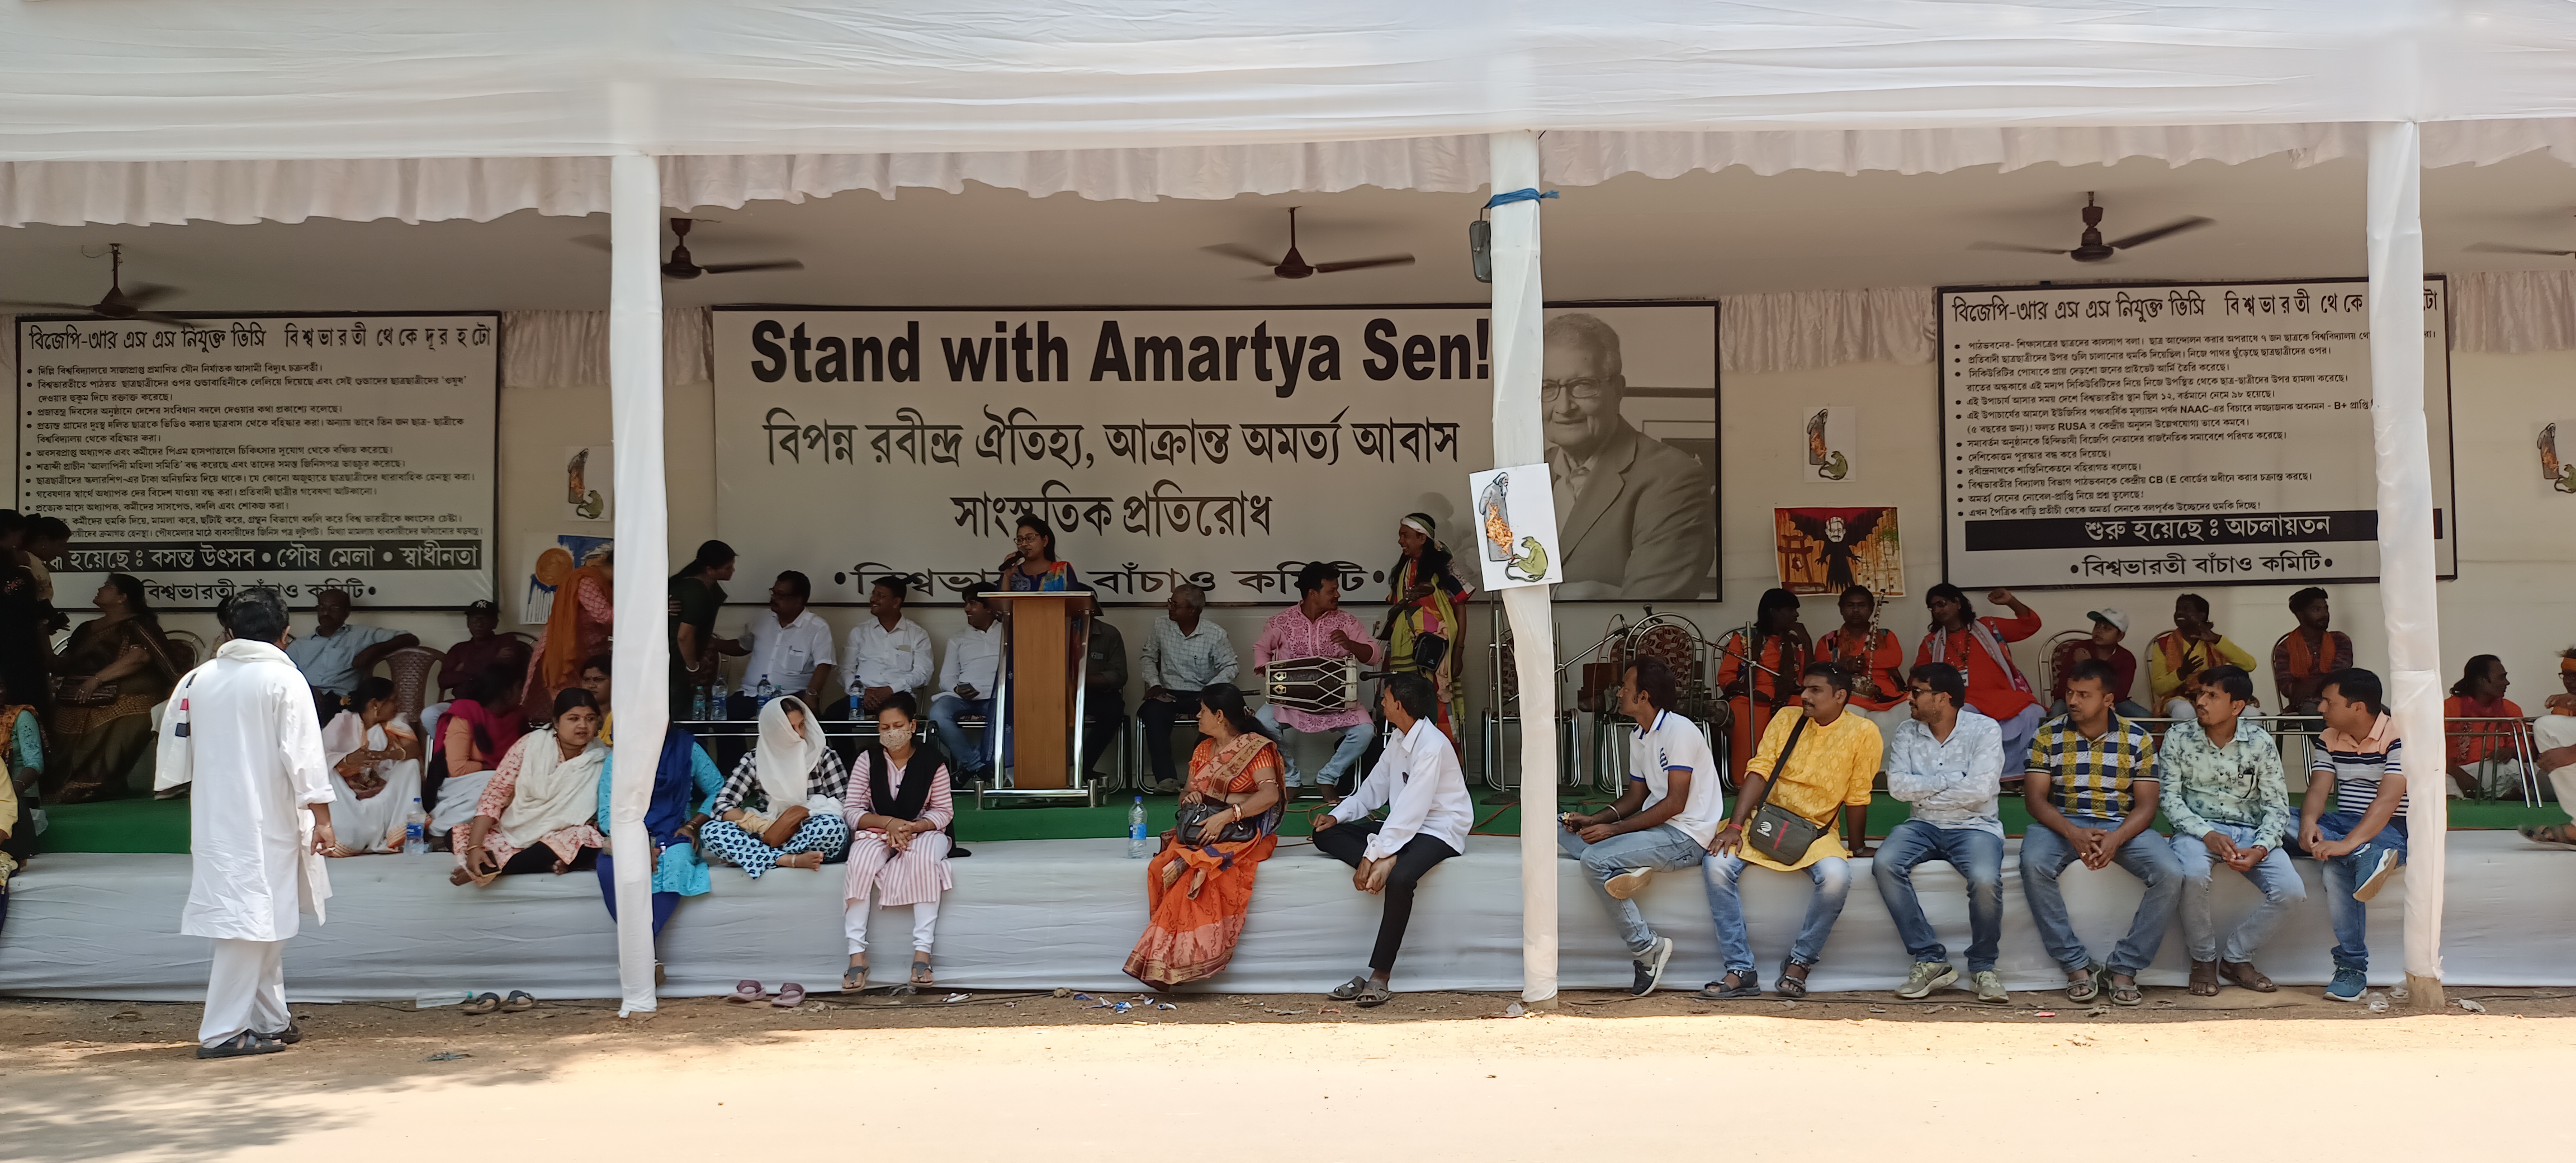 Stand with Amartya Sen